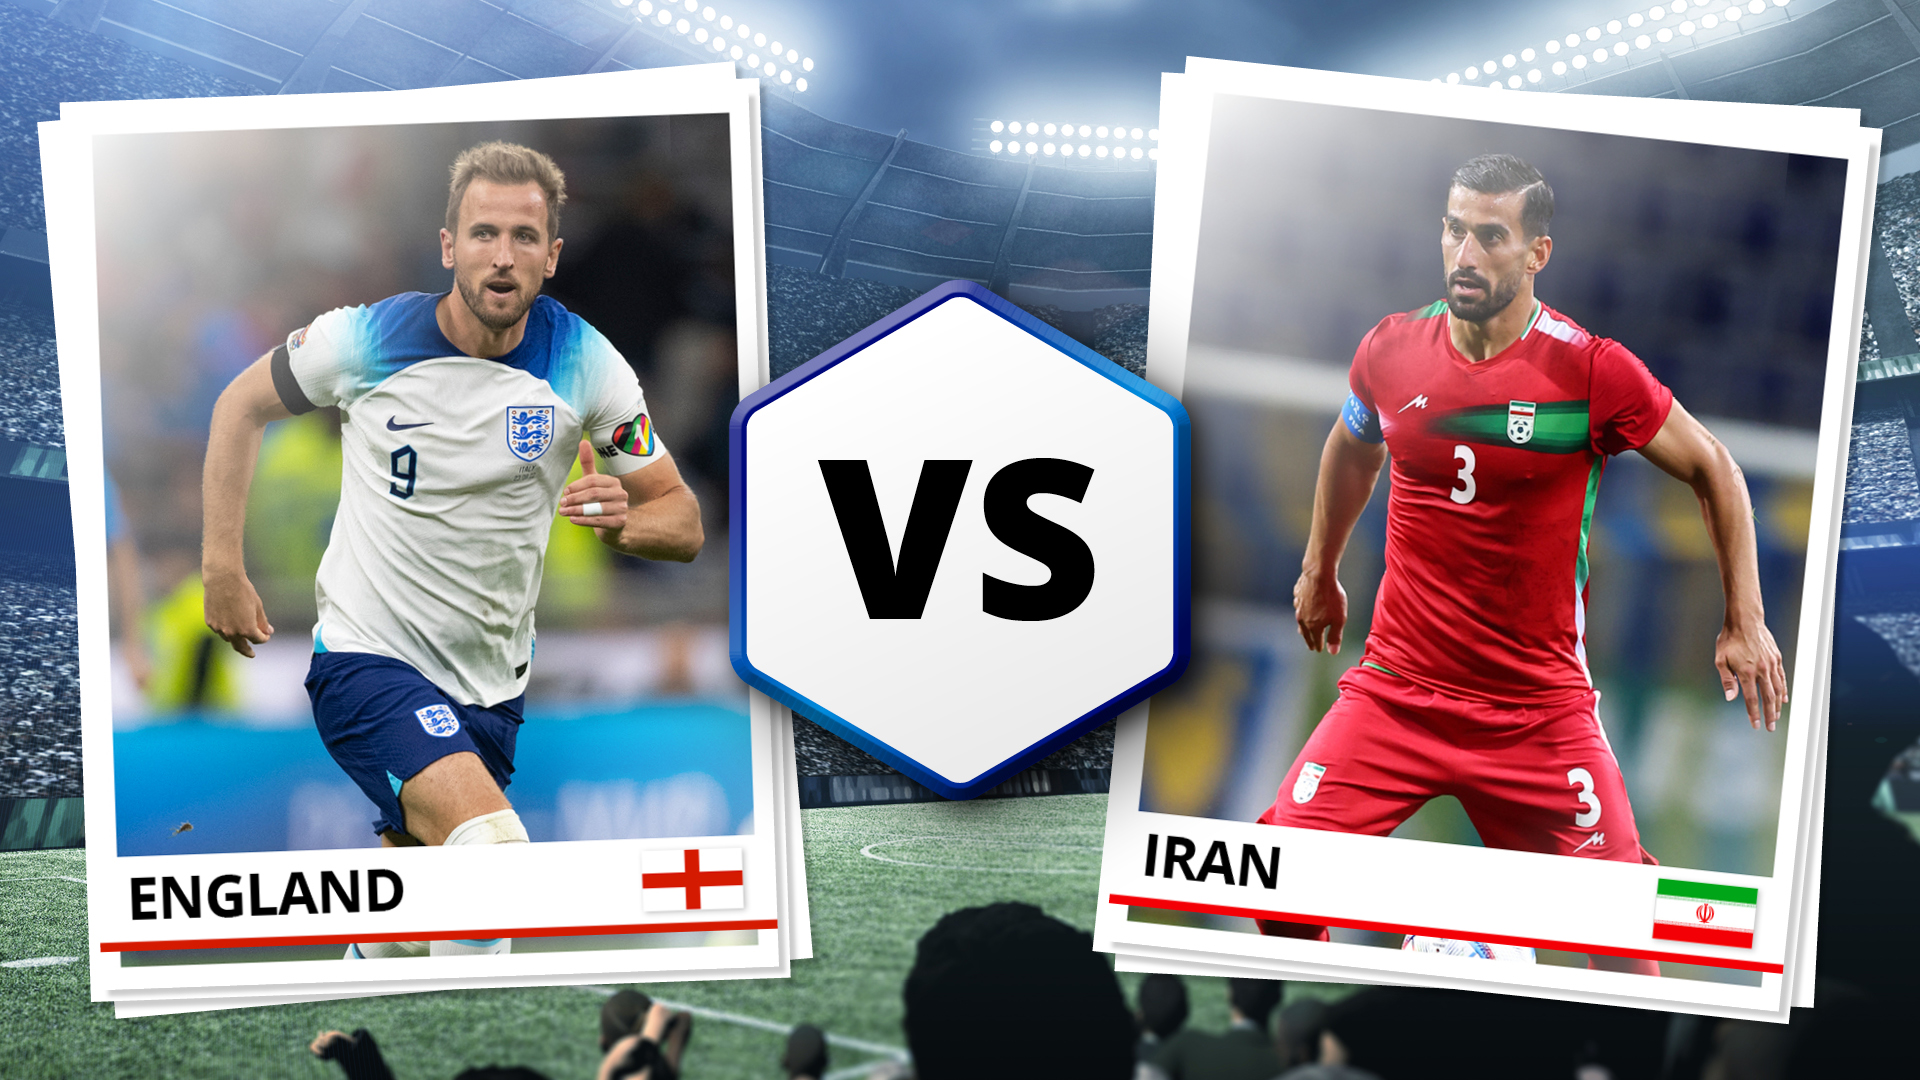 England vs Iran Live Streaming